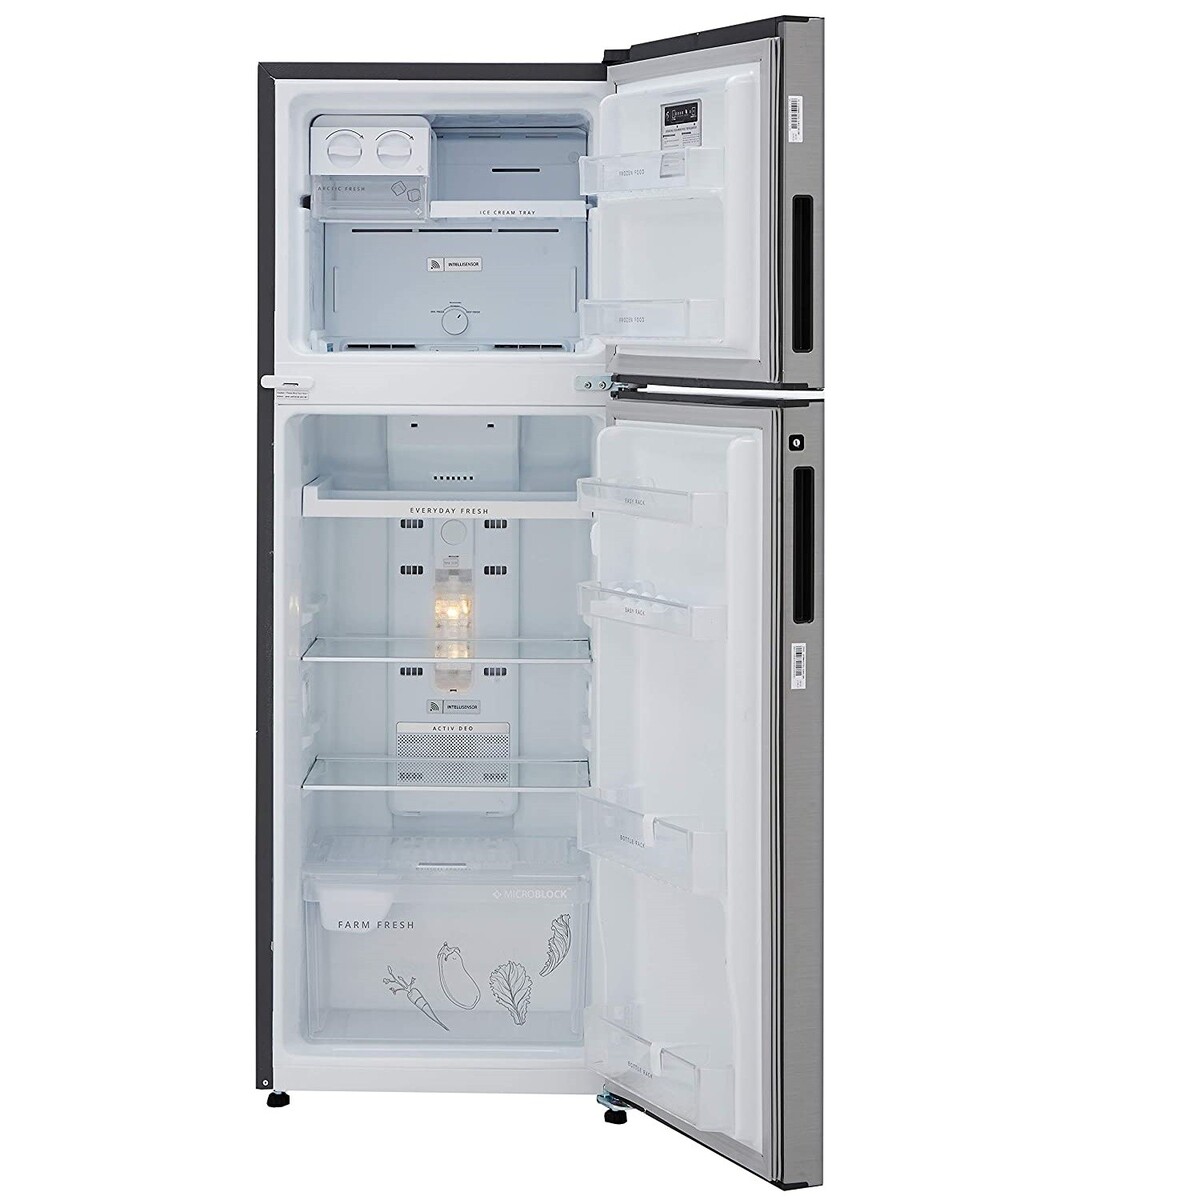 Whirlpool Refrigerator IFINVCNV278 Steel Onyx 265Ltr